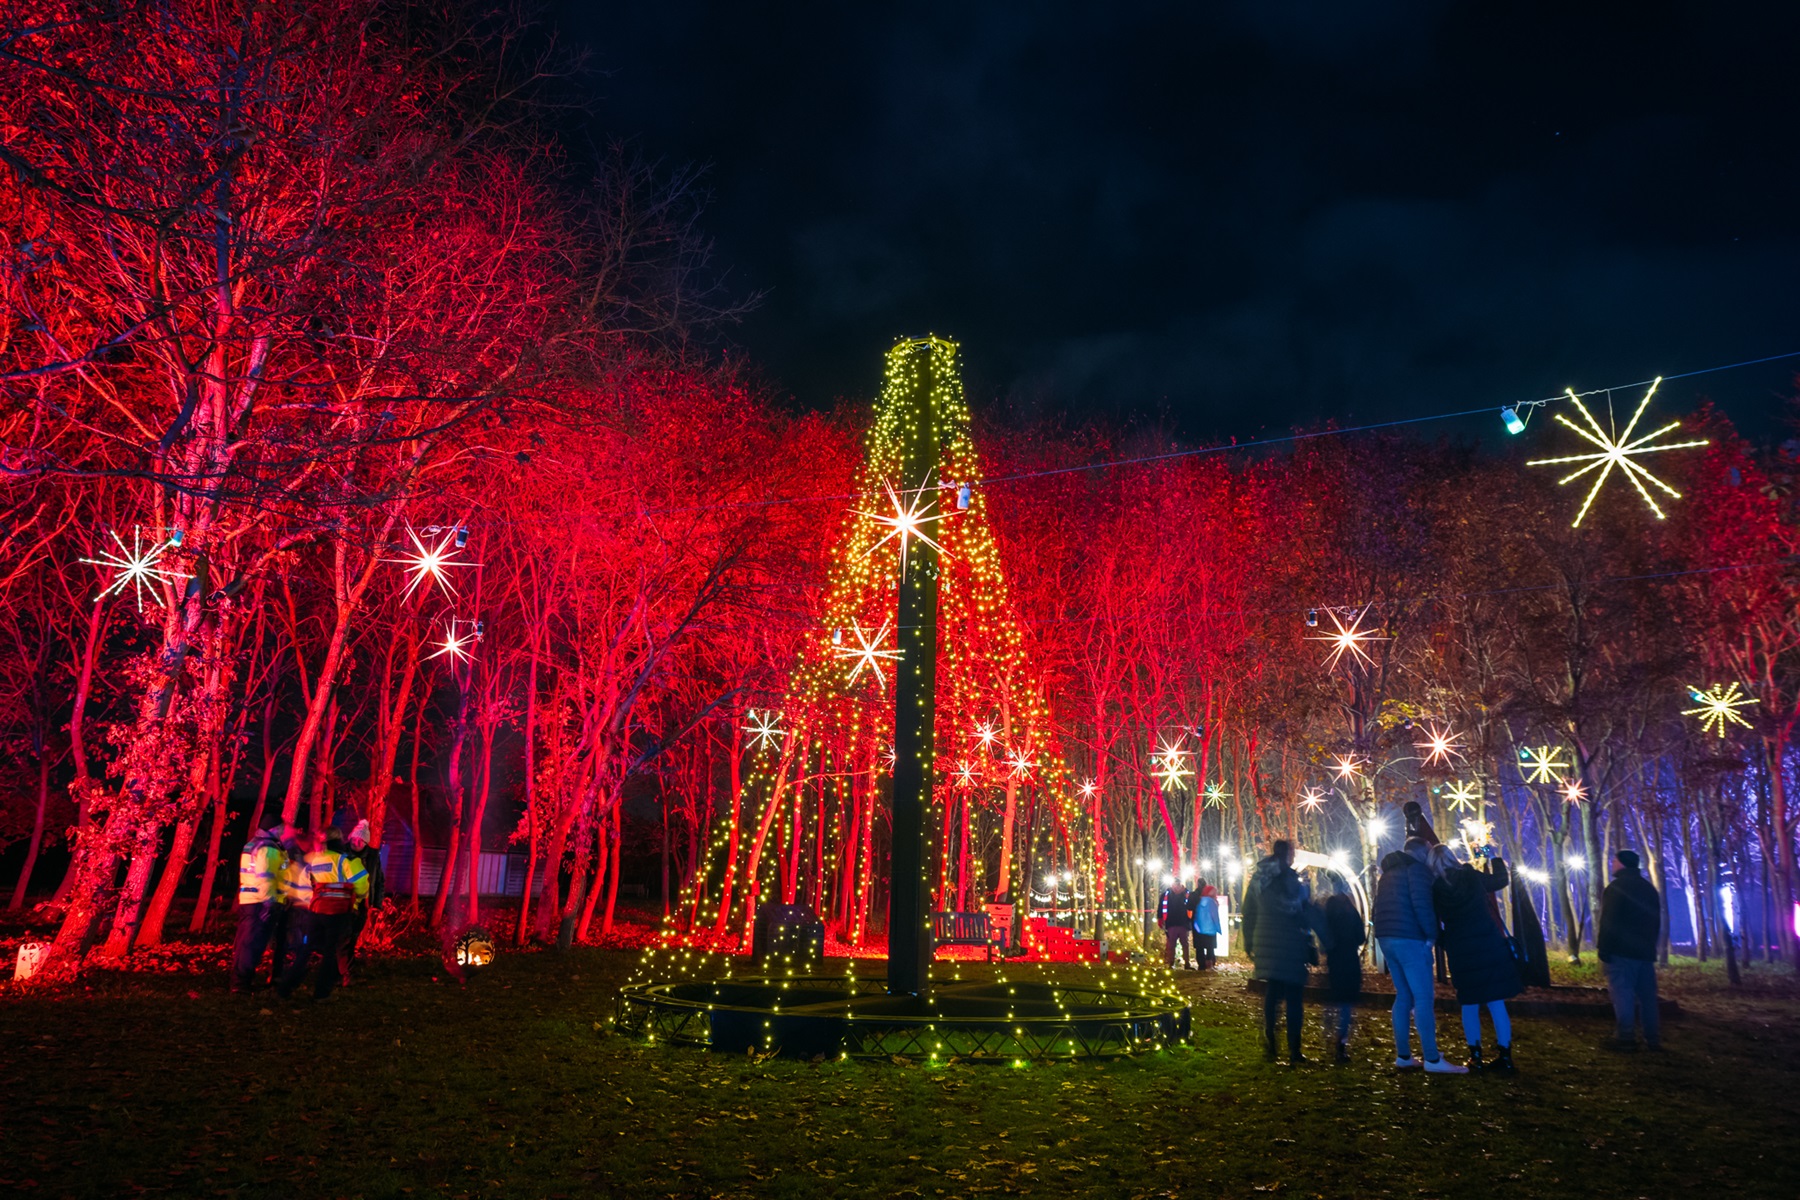 One of the Illuminated Arboretum installations from 2022